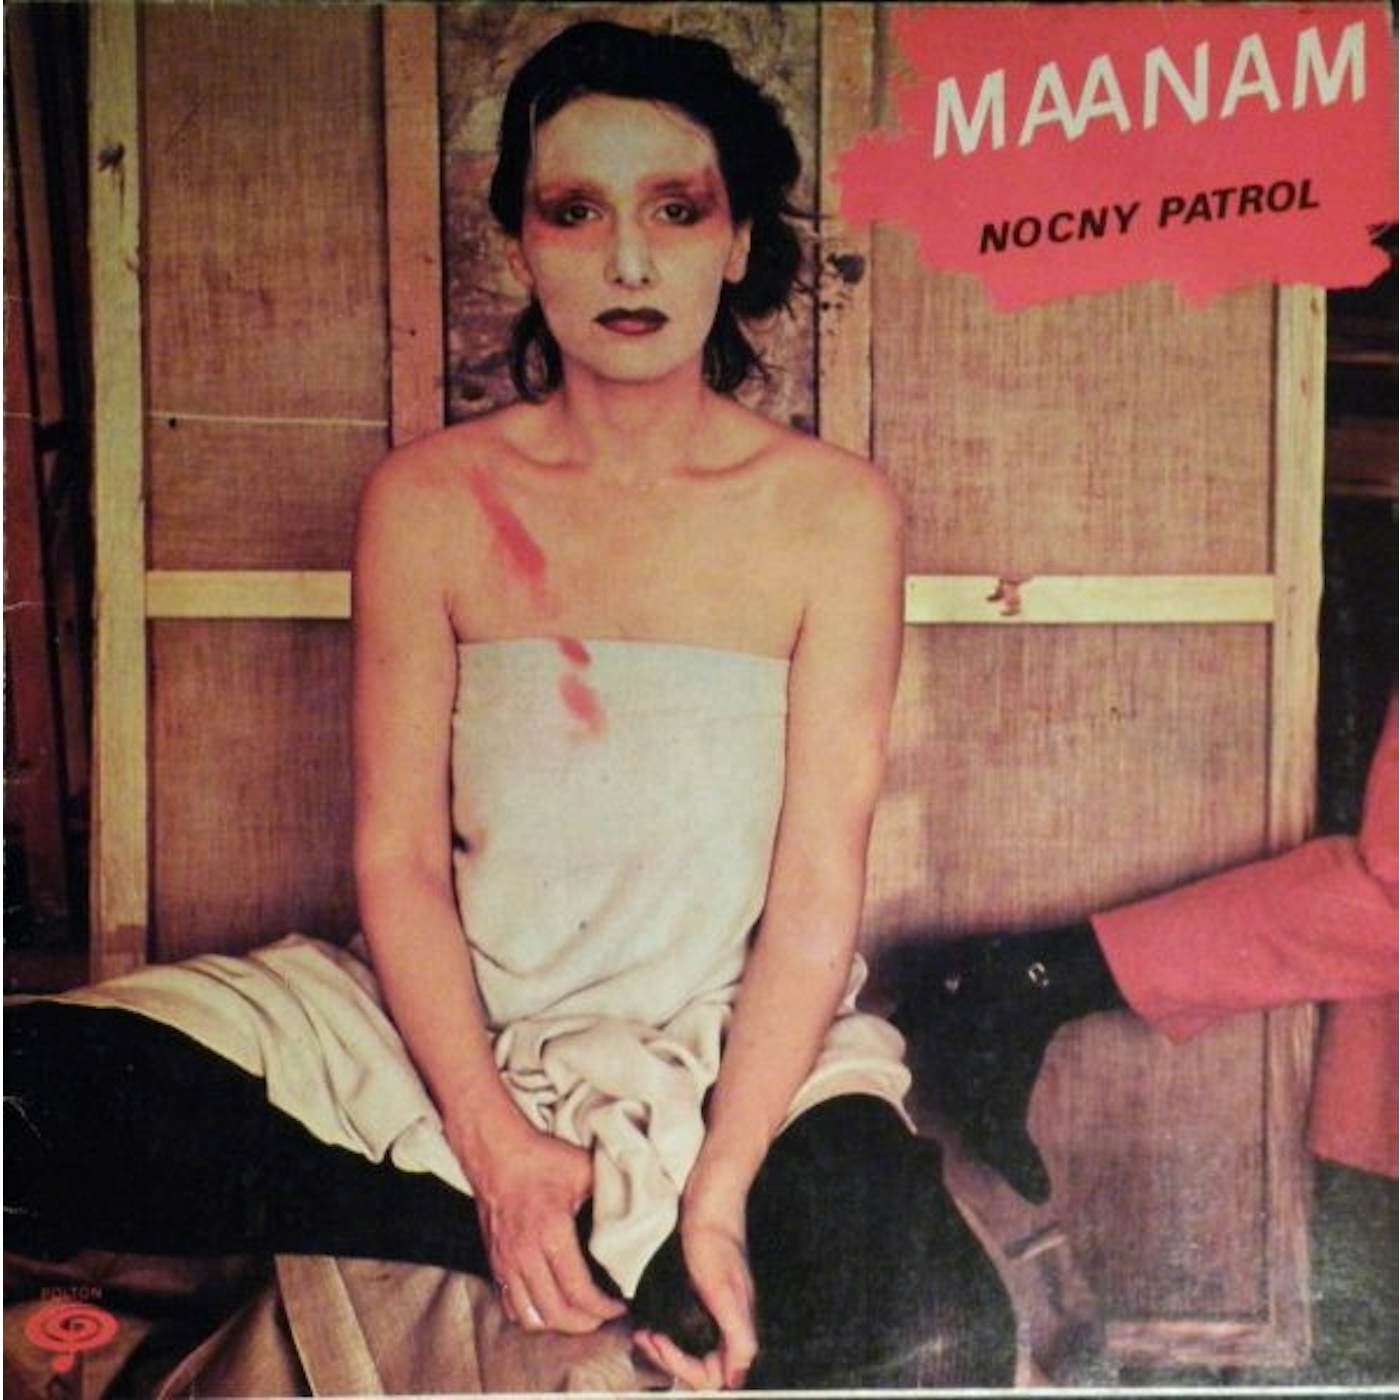 Maanam Nocny Patrol Vinyl Record